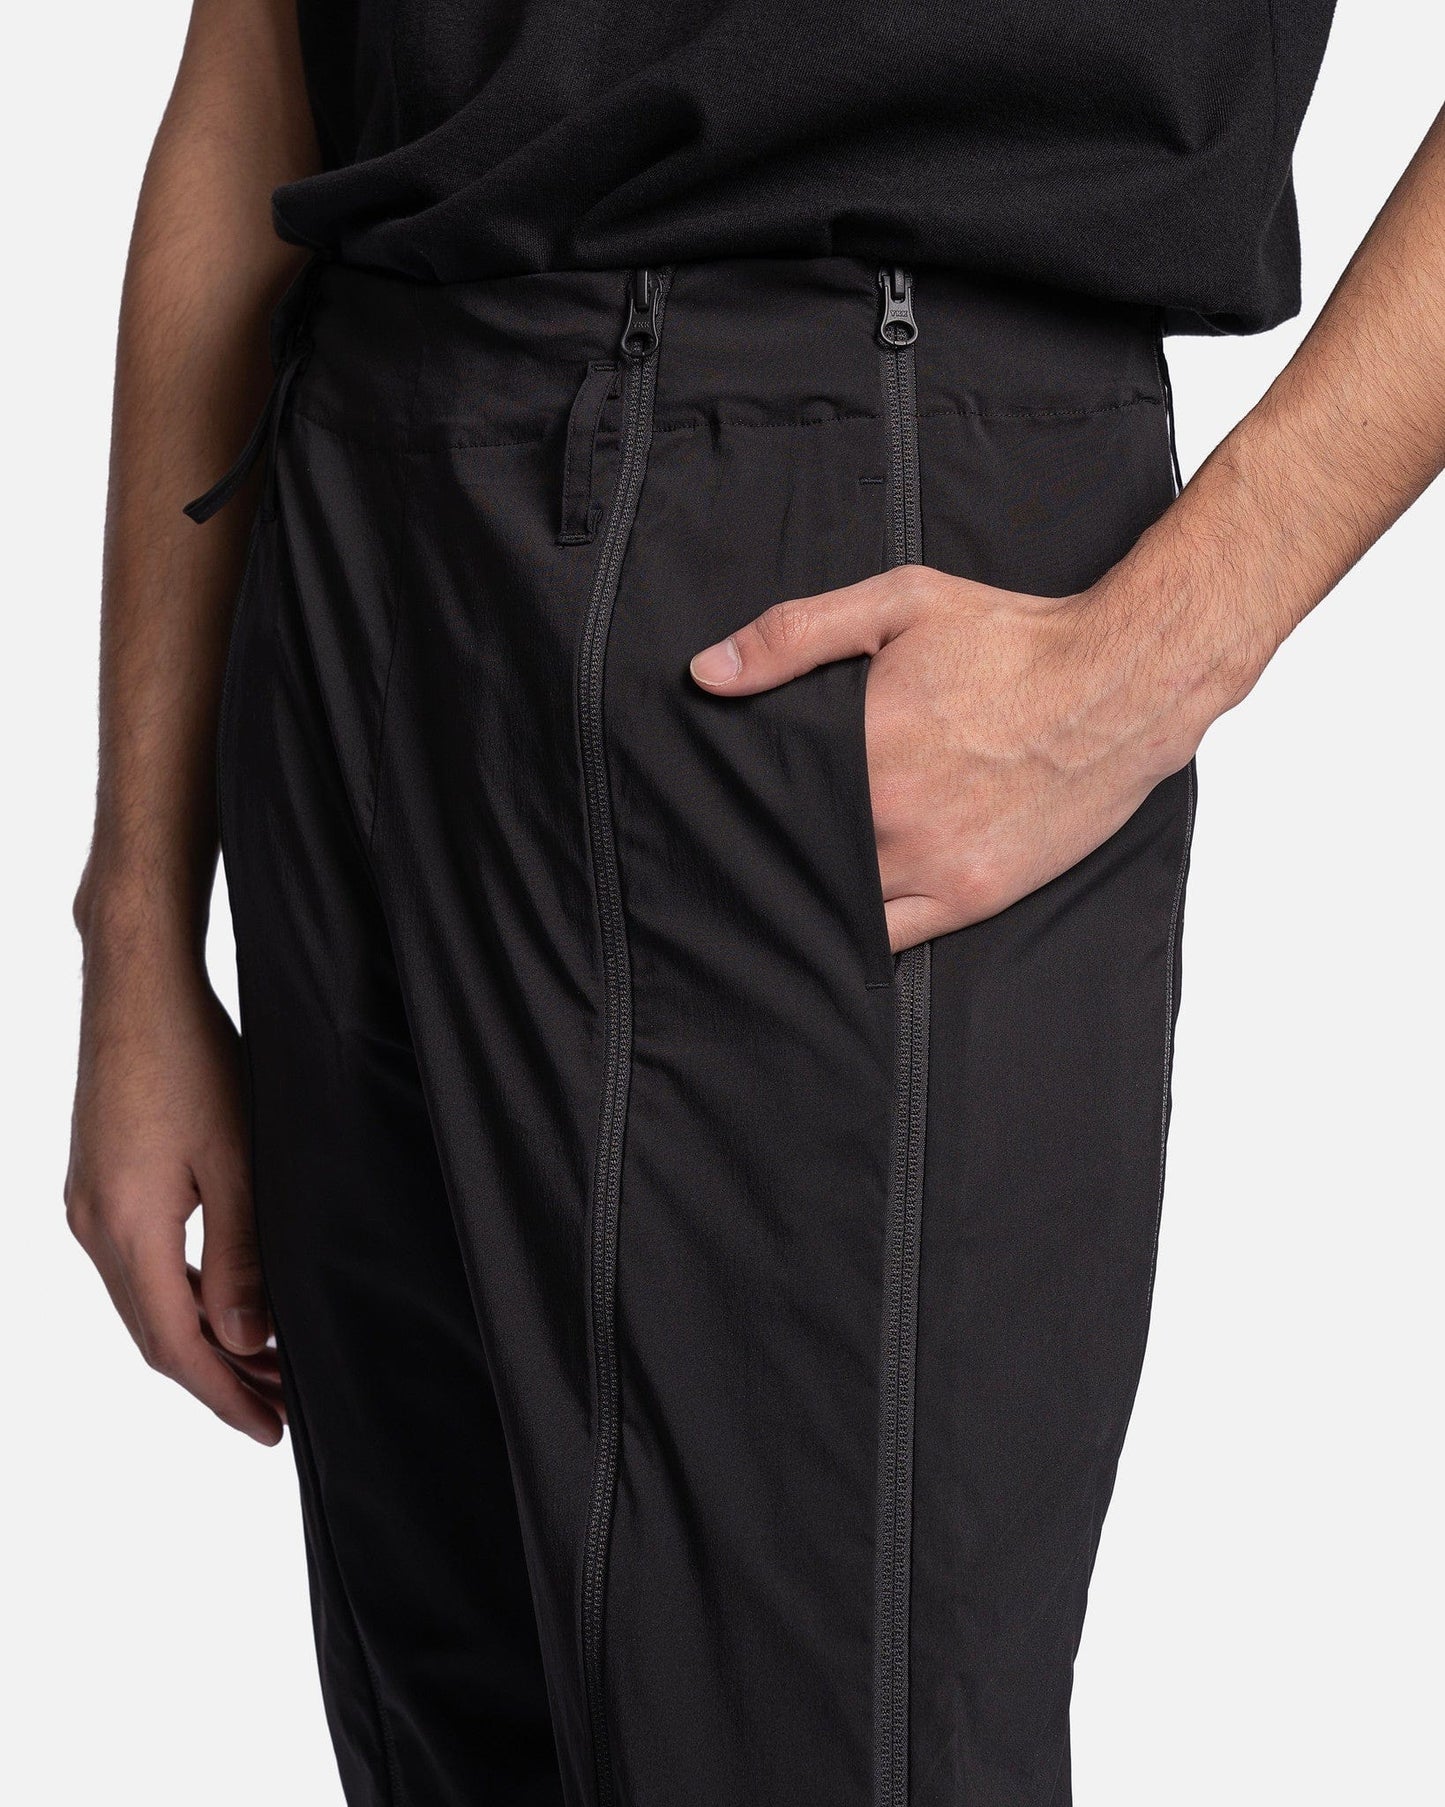 POST ARCHIVE FACTION (P.A.F) Men's Pants 5.0+ Technical Pants Center in Black